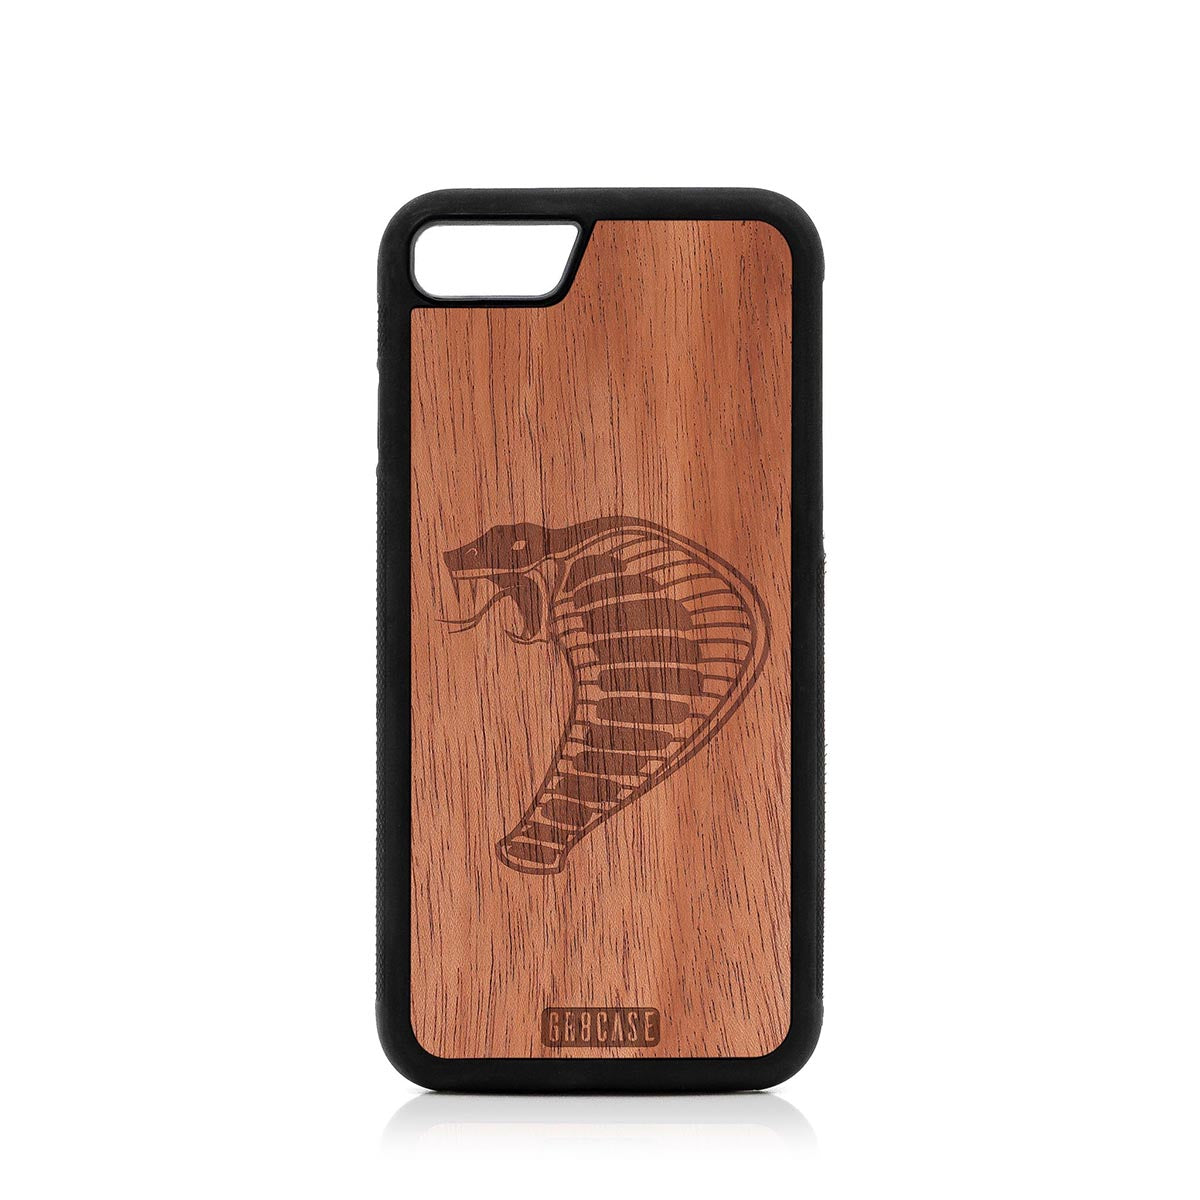 Cobra Design Wood Case For iPhone 7/8 by GR8CASE